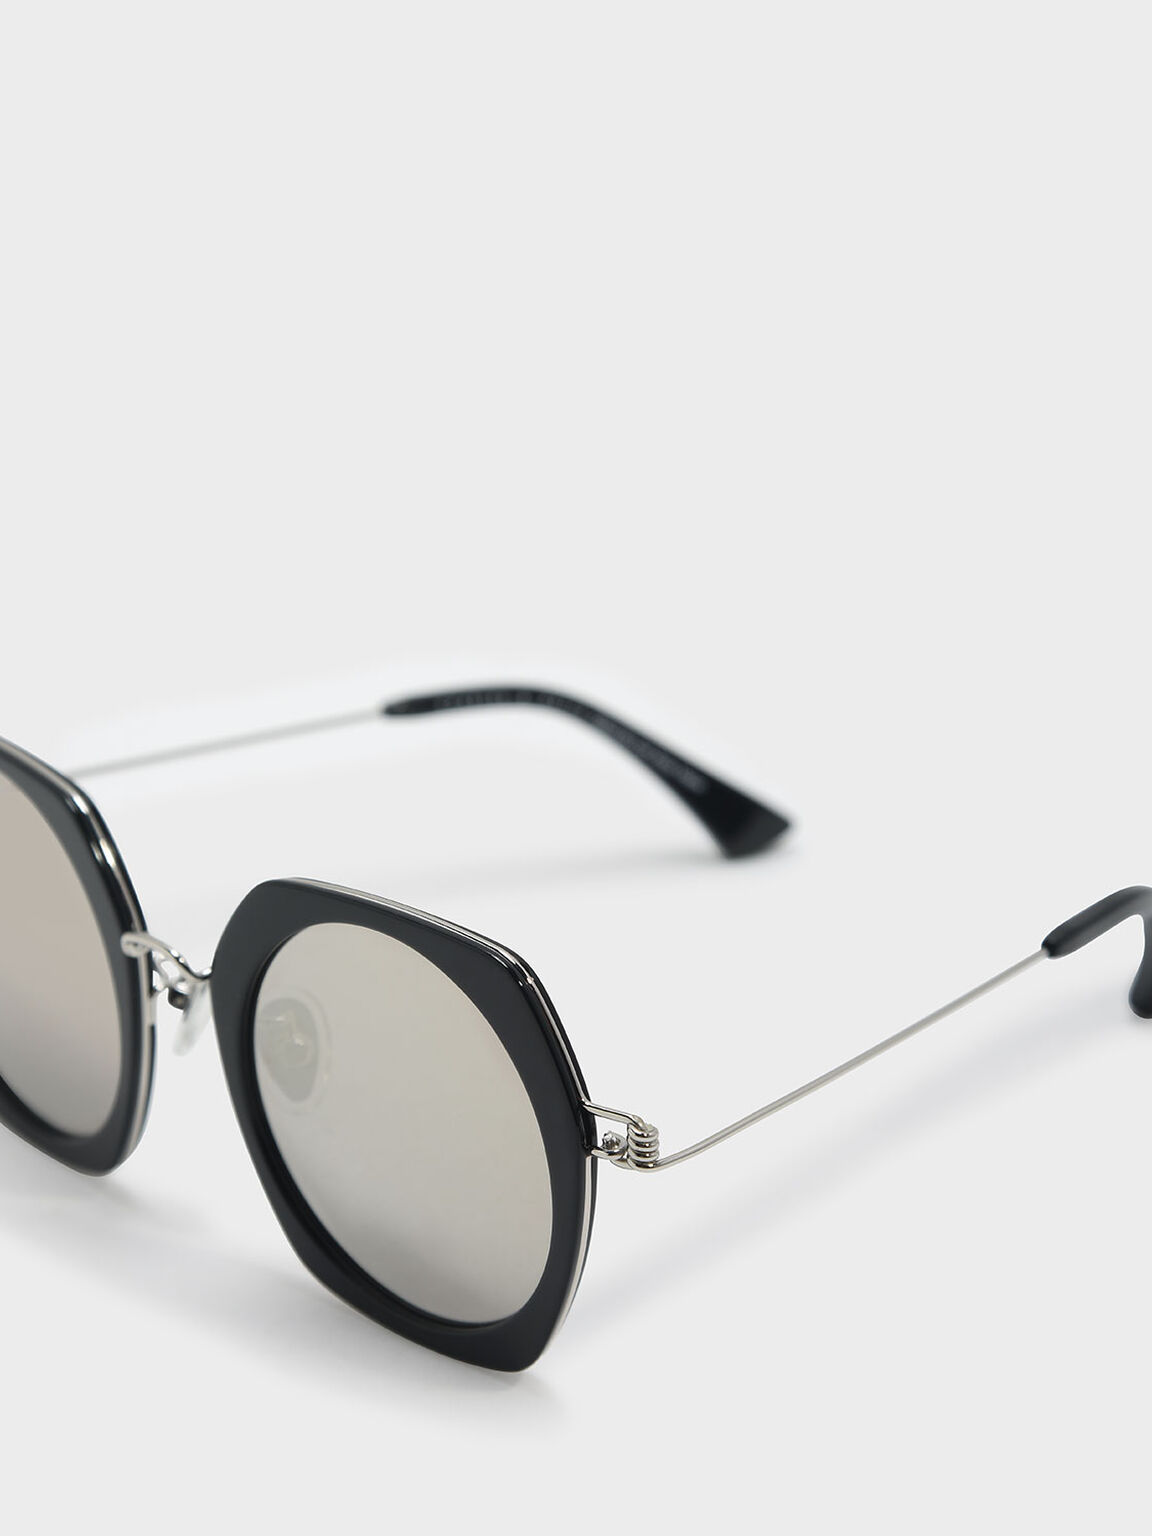 Geometric Frame Sunglasses, Black, hi-res